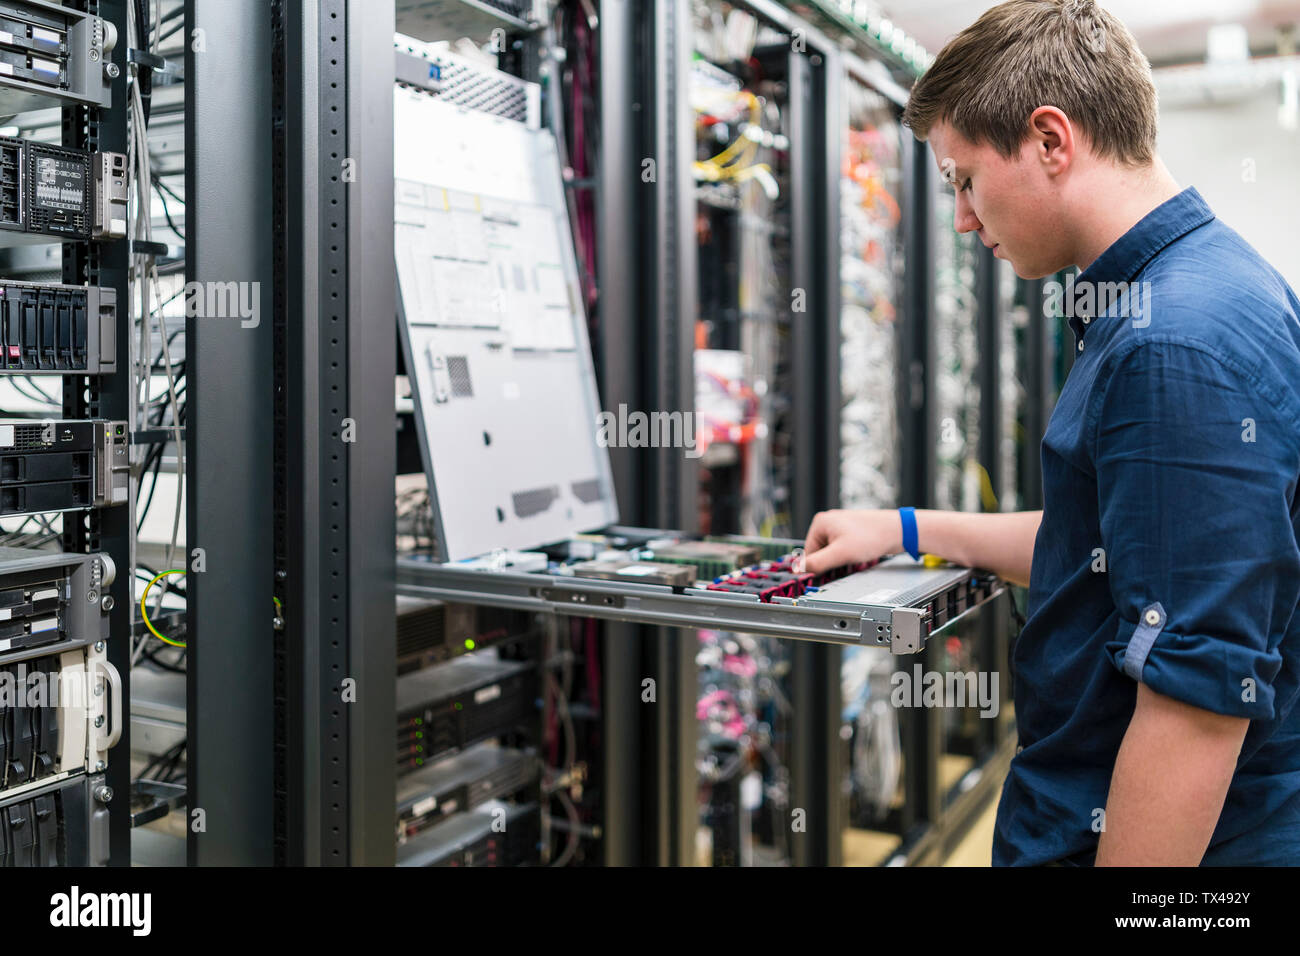 Teenager working in server room Stock Photo